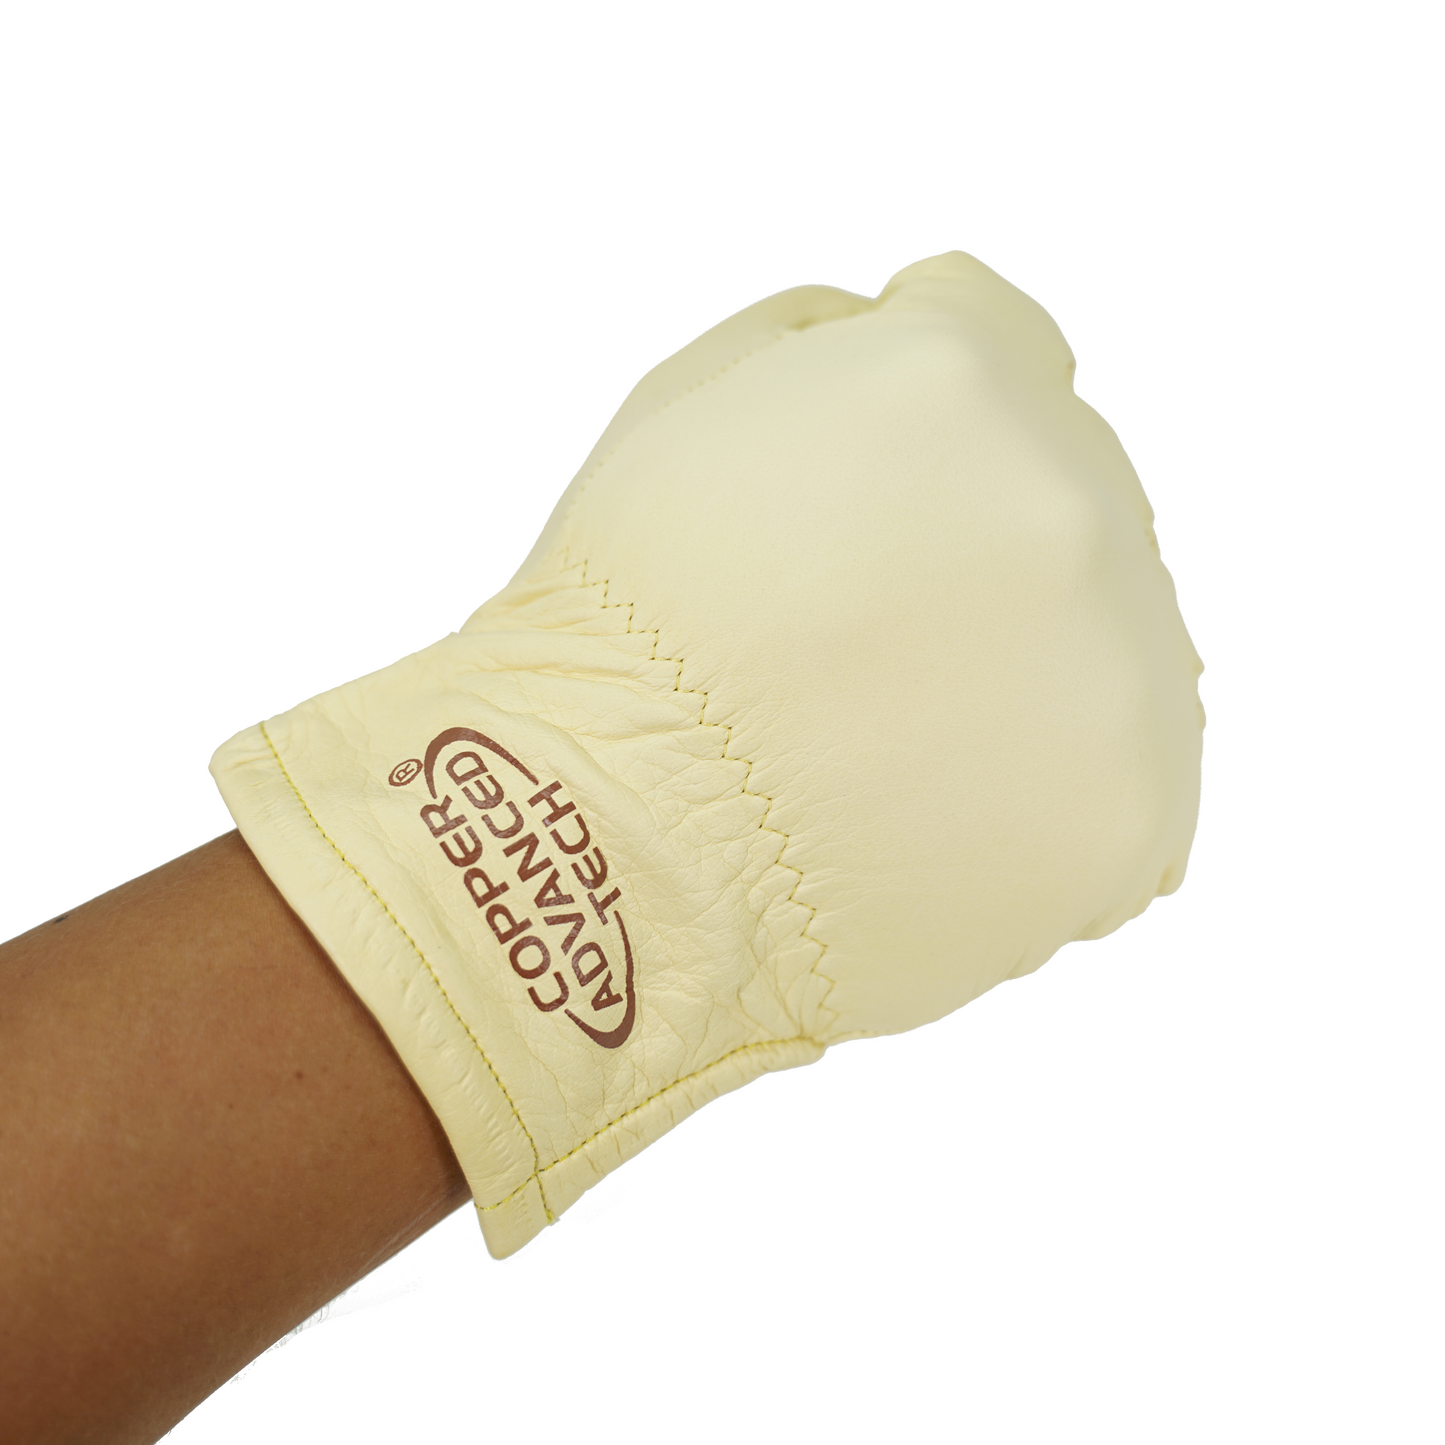 Copper Advanced Tech Work gloves | Premium Goatskin Leather, Extreme Flexibility, Safety Work Gloves